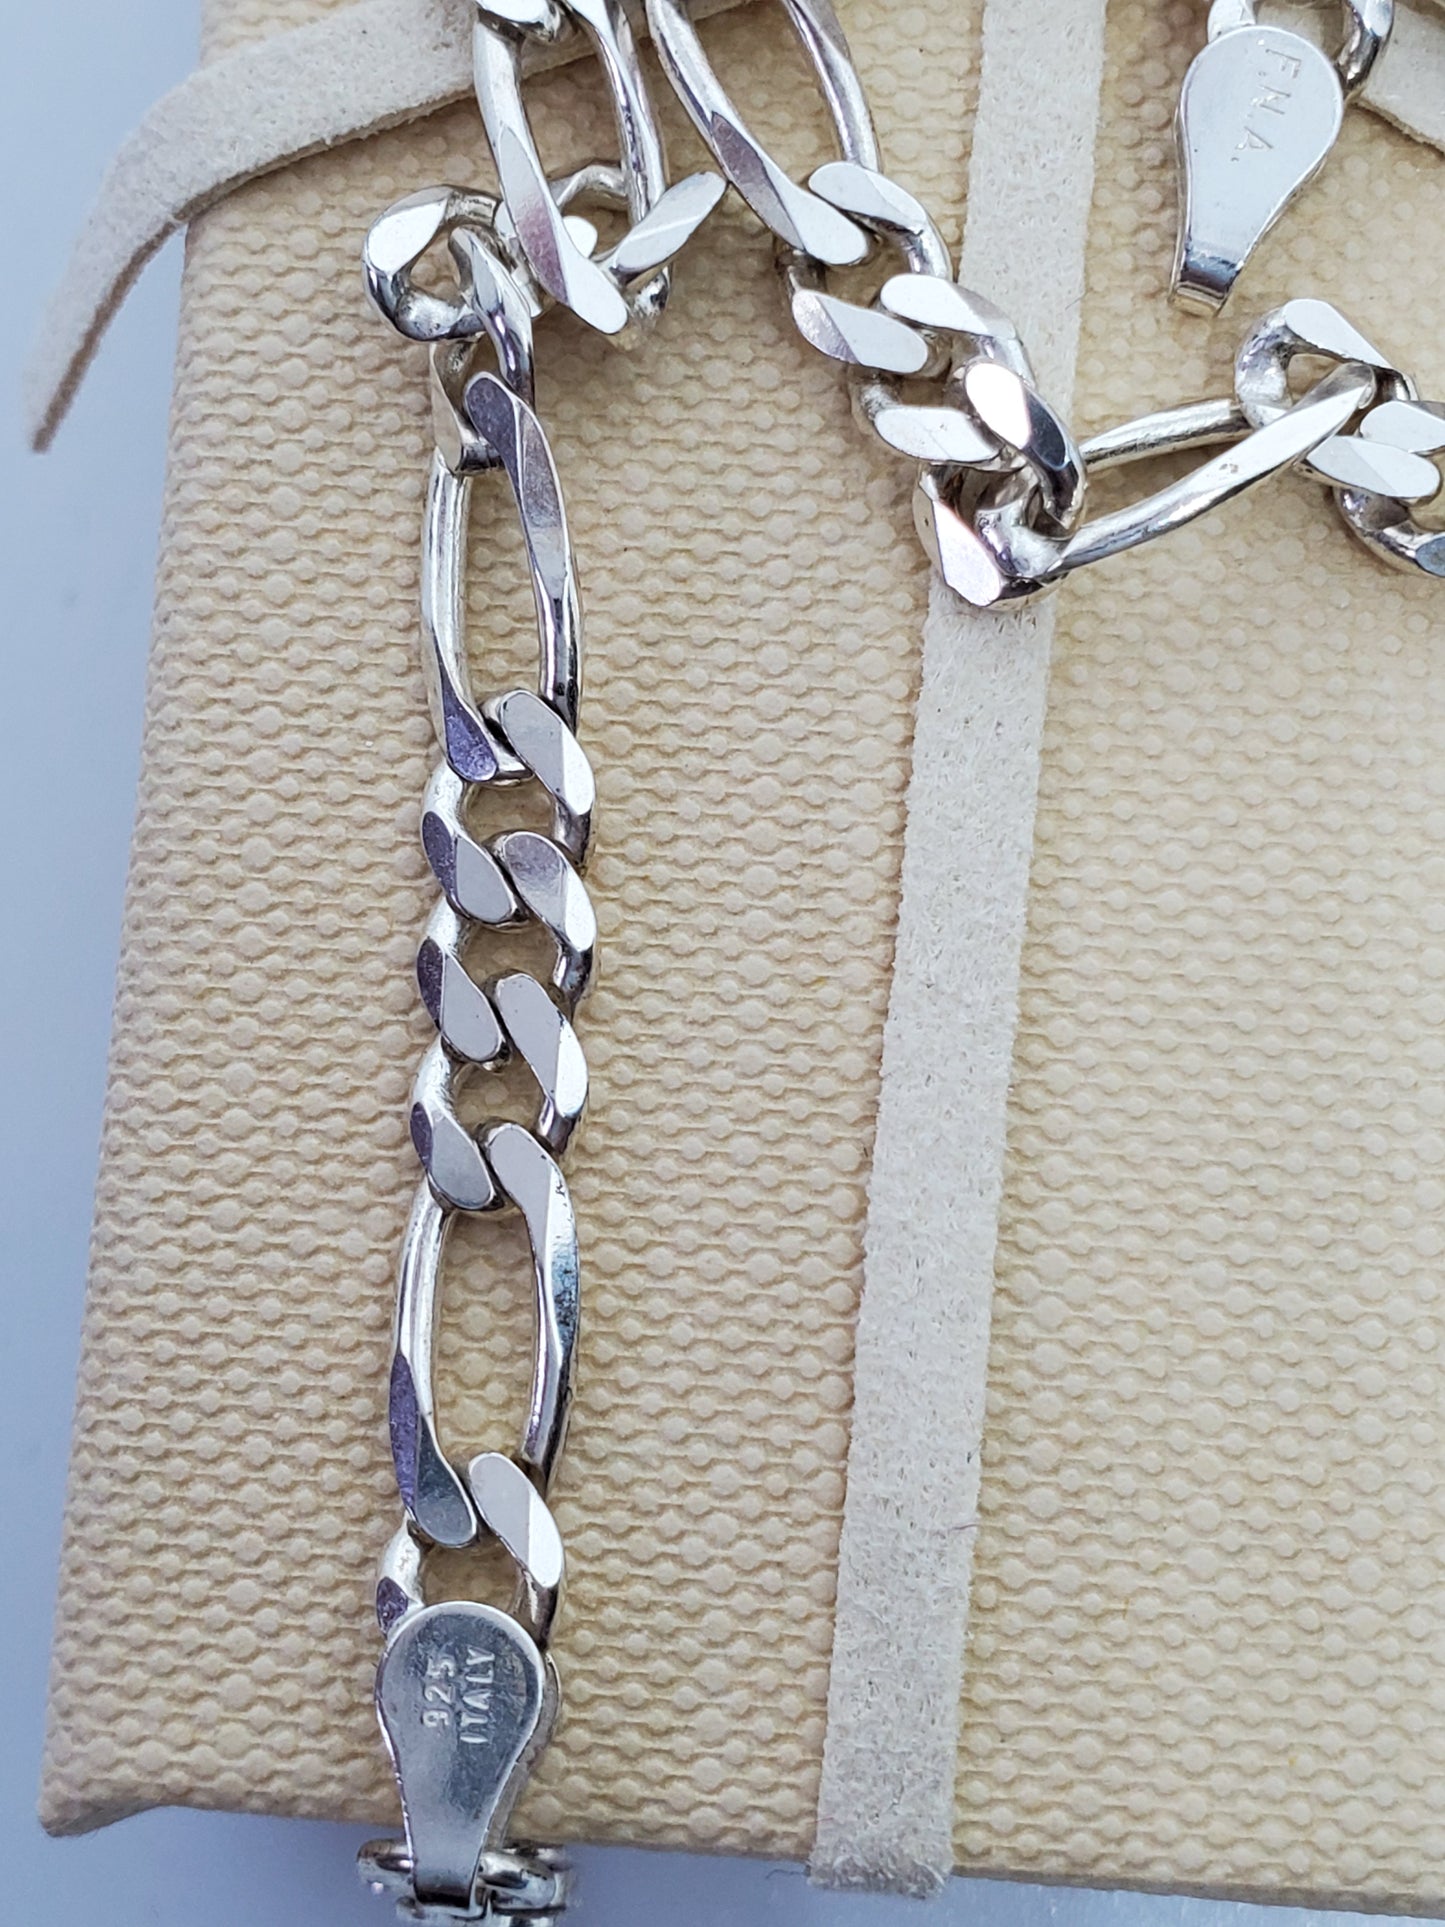 Real silver figaro link bracelet - 7Jewelry